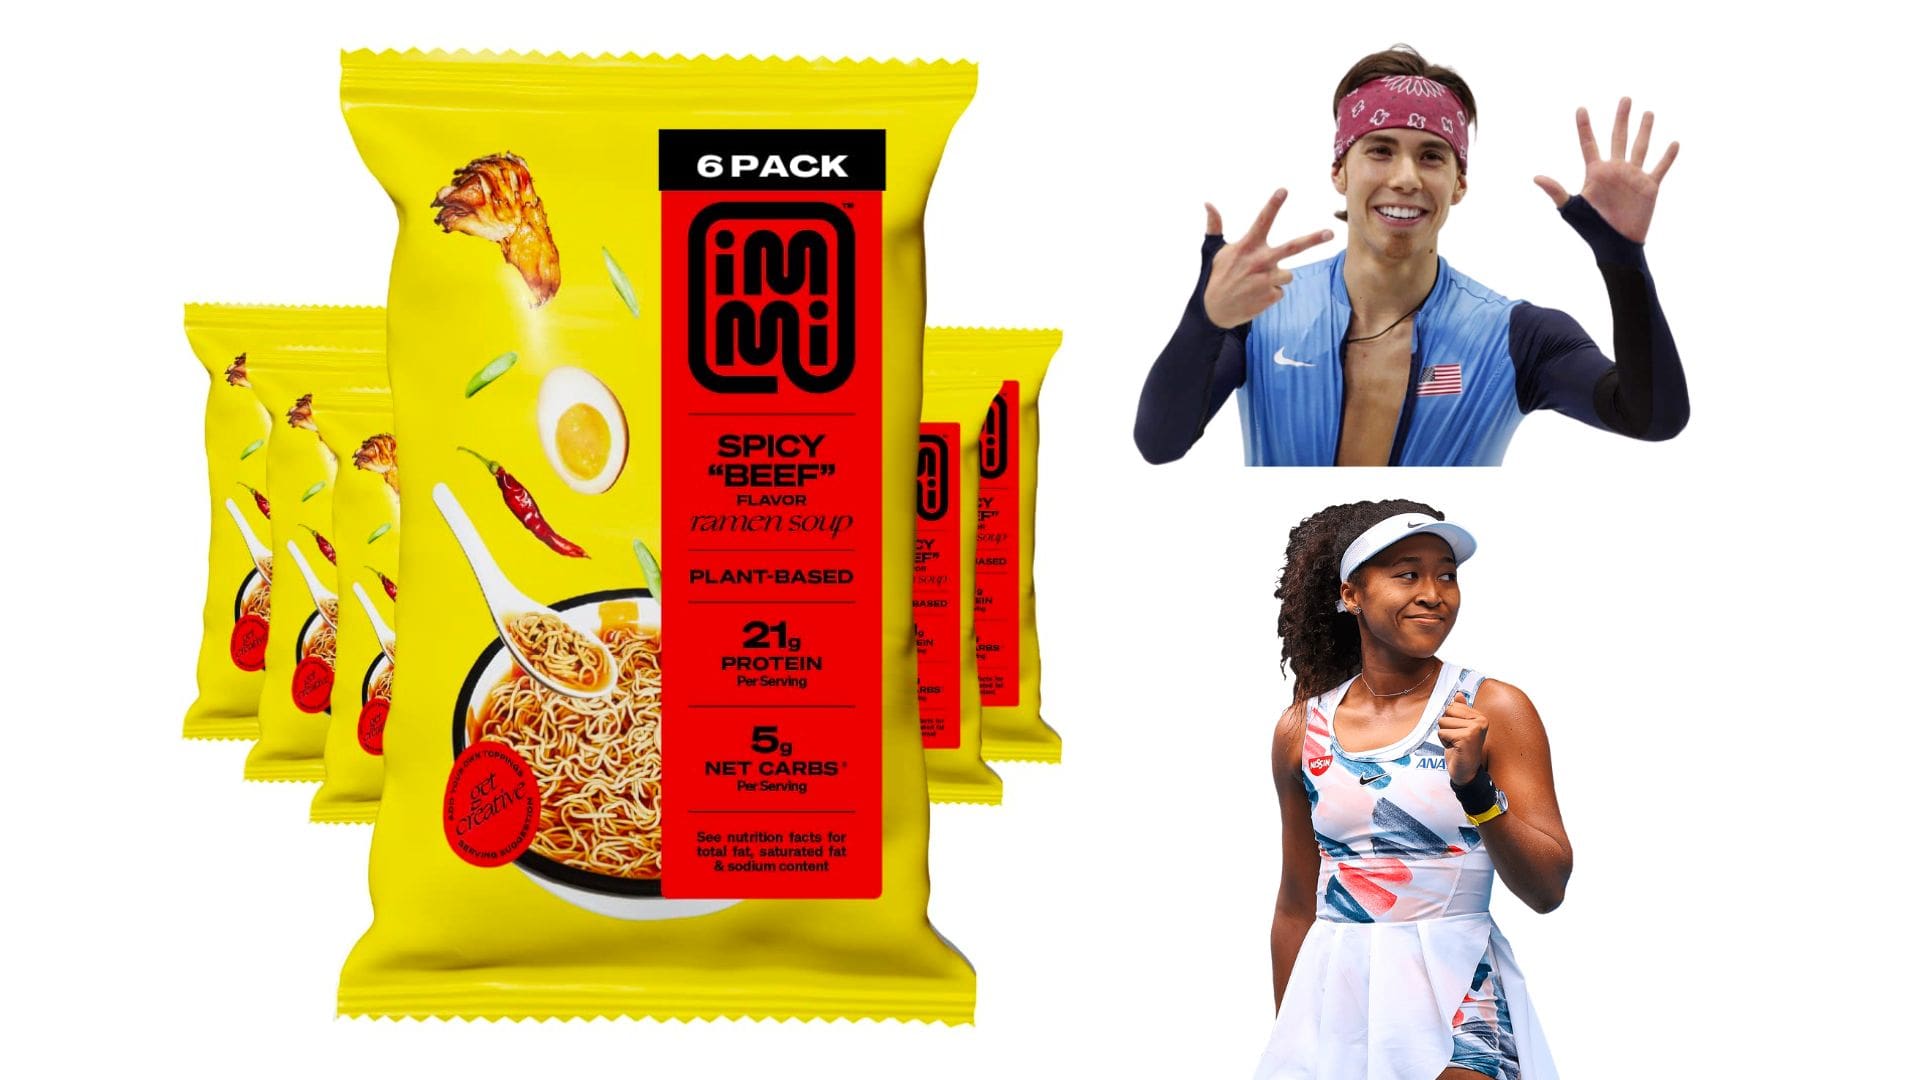 Naomi Osaka and Apolo Ohno Invest in Ramen Brand immi eats